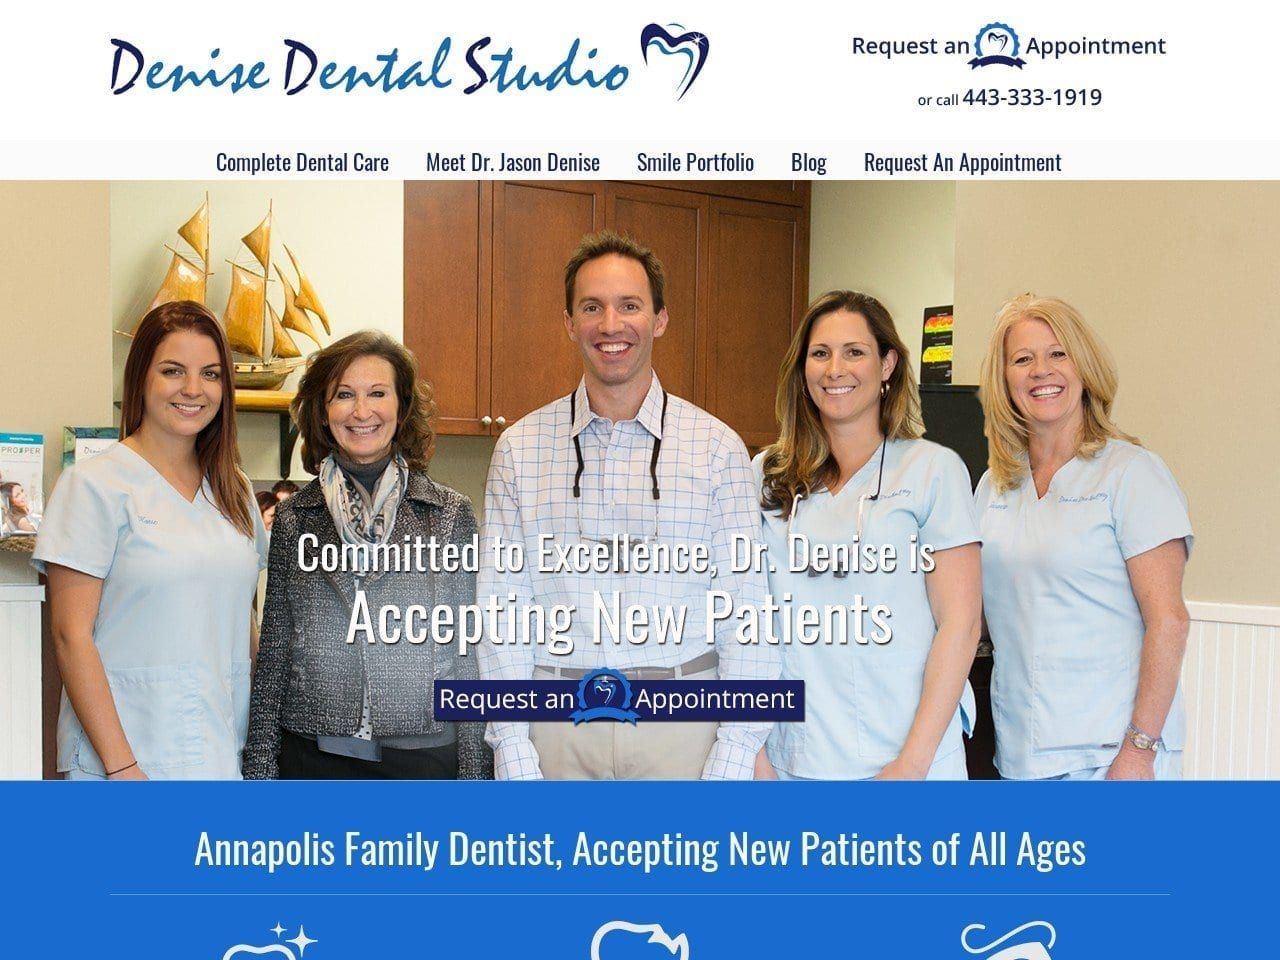 Denise Dental Studio Website Screenshot from annapolisdds.com